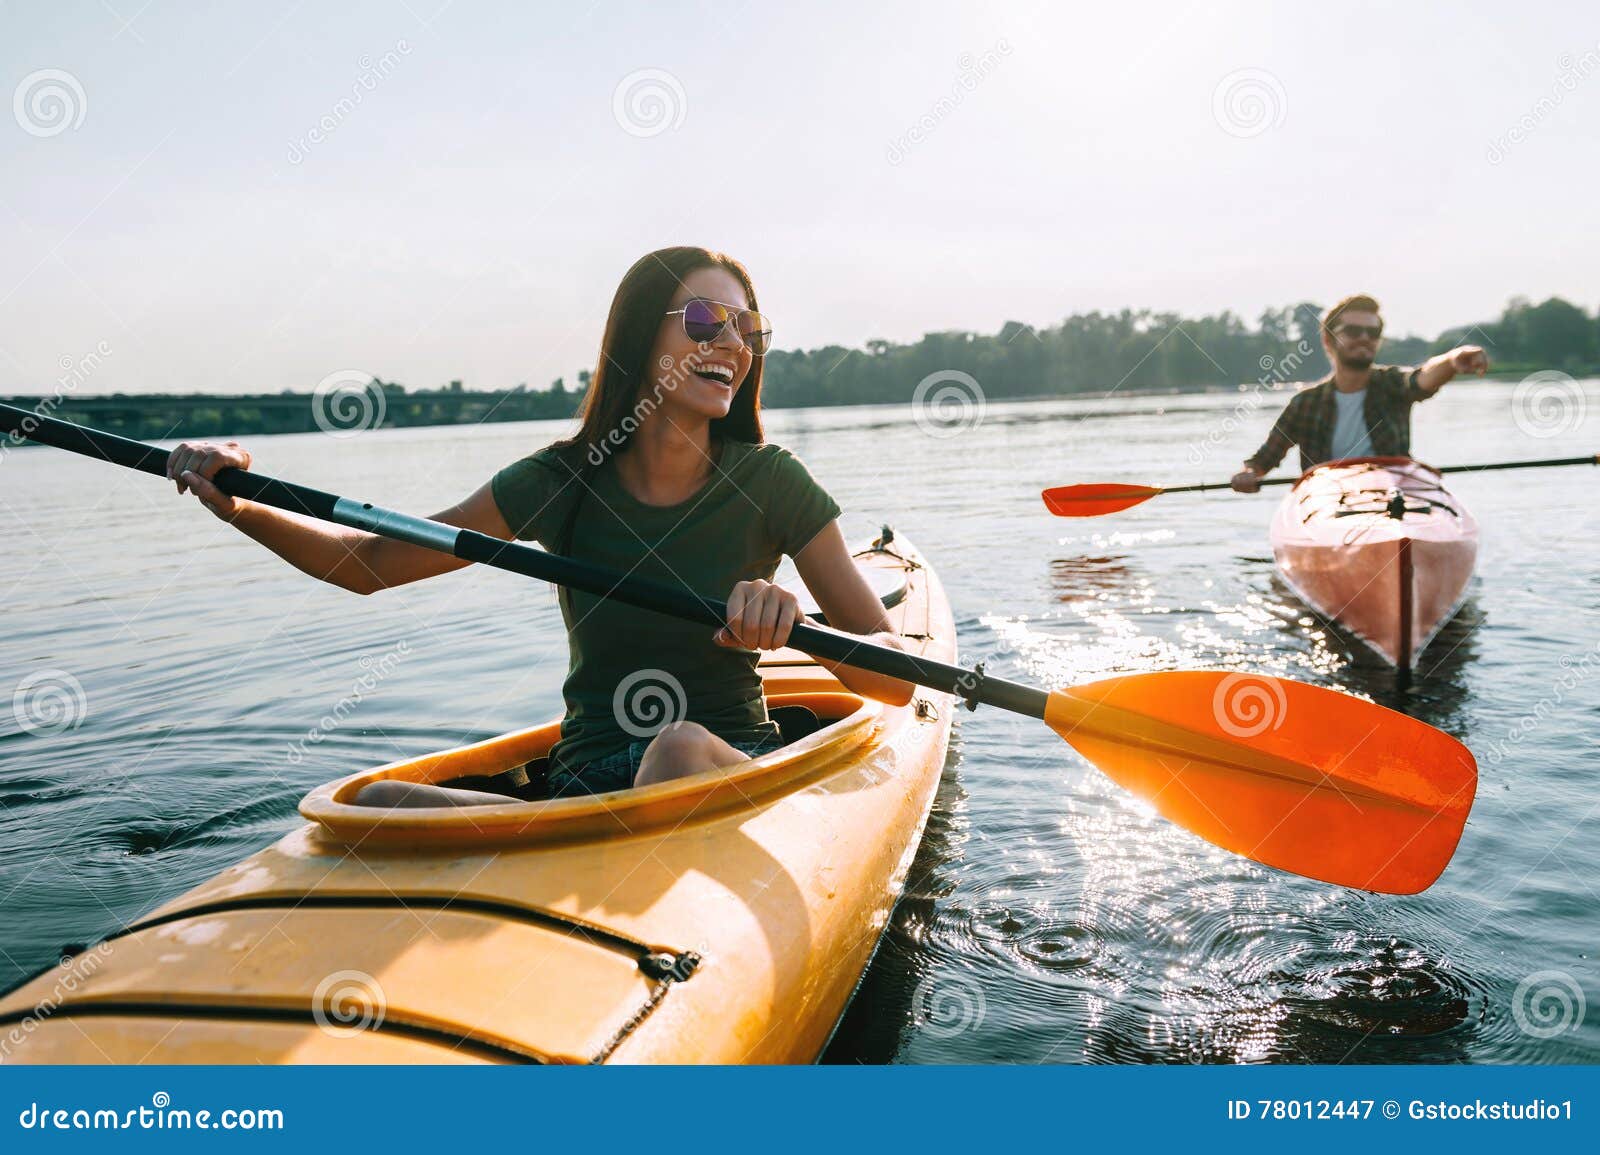 couple kayaking together.